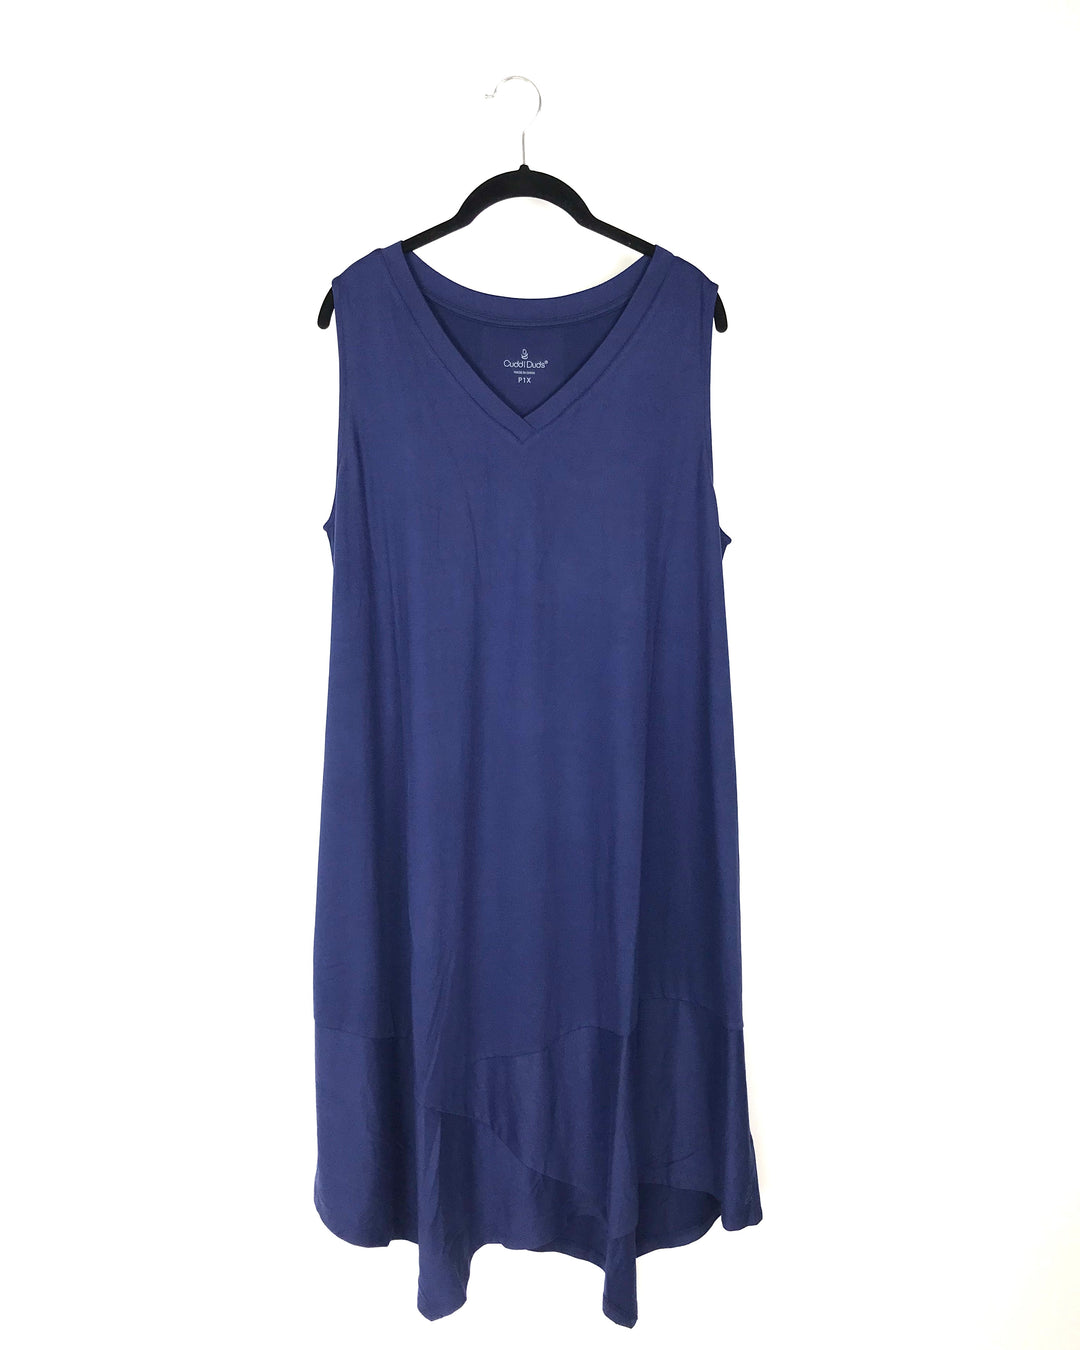 Navy Blue Dress - Petite 1X